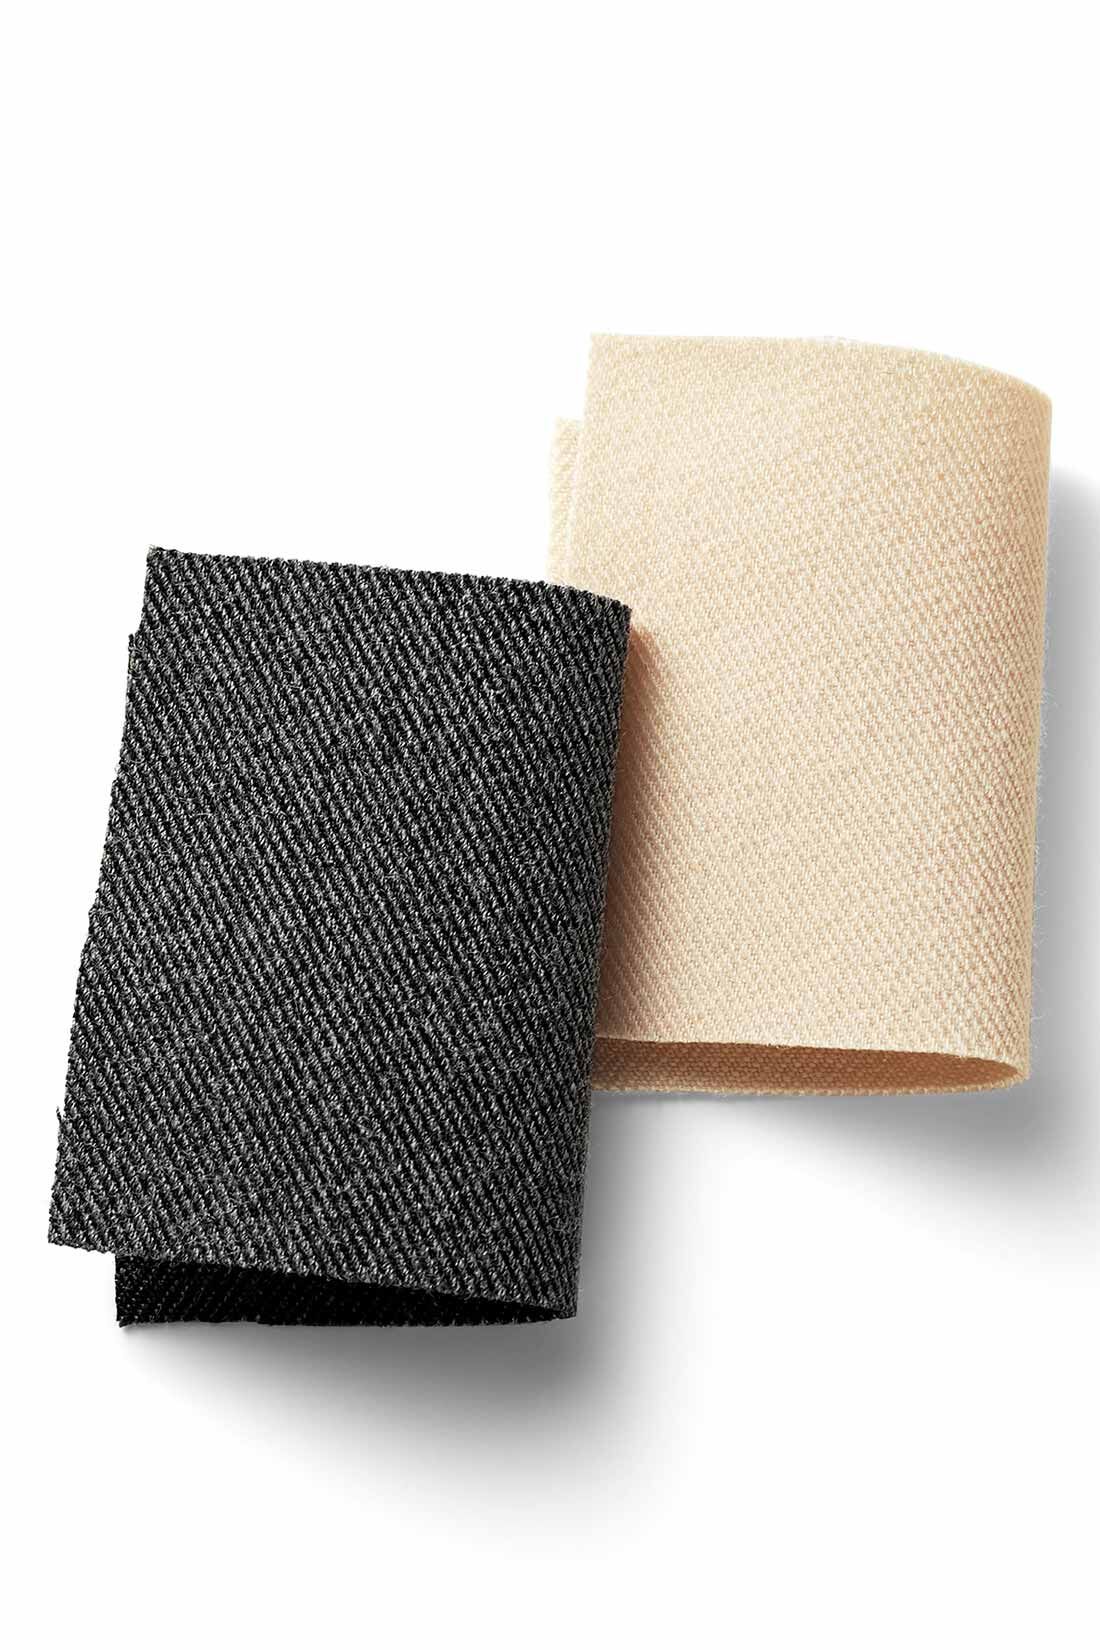 MEDE19F|MEDE19F　すそリブバルーンパンツ〈グレー〉|落ち感のある綾織りストレッチ素材。スーツライクな見た目によらず、快適なはき心地です。